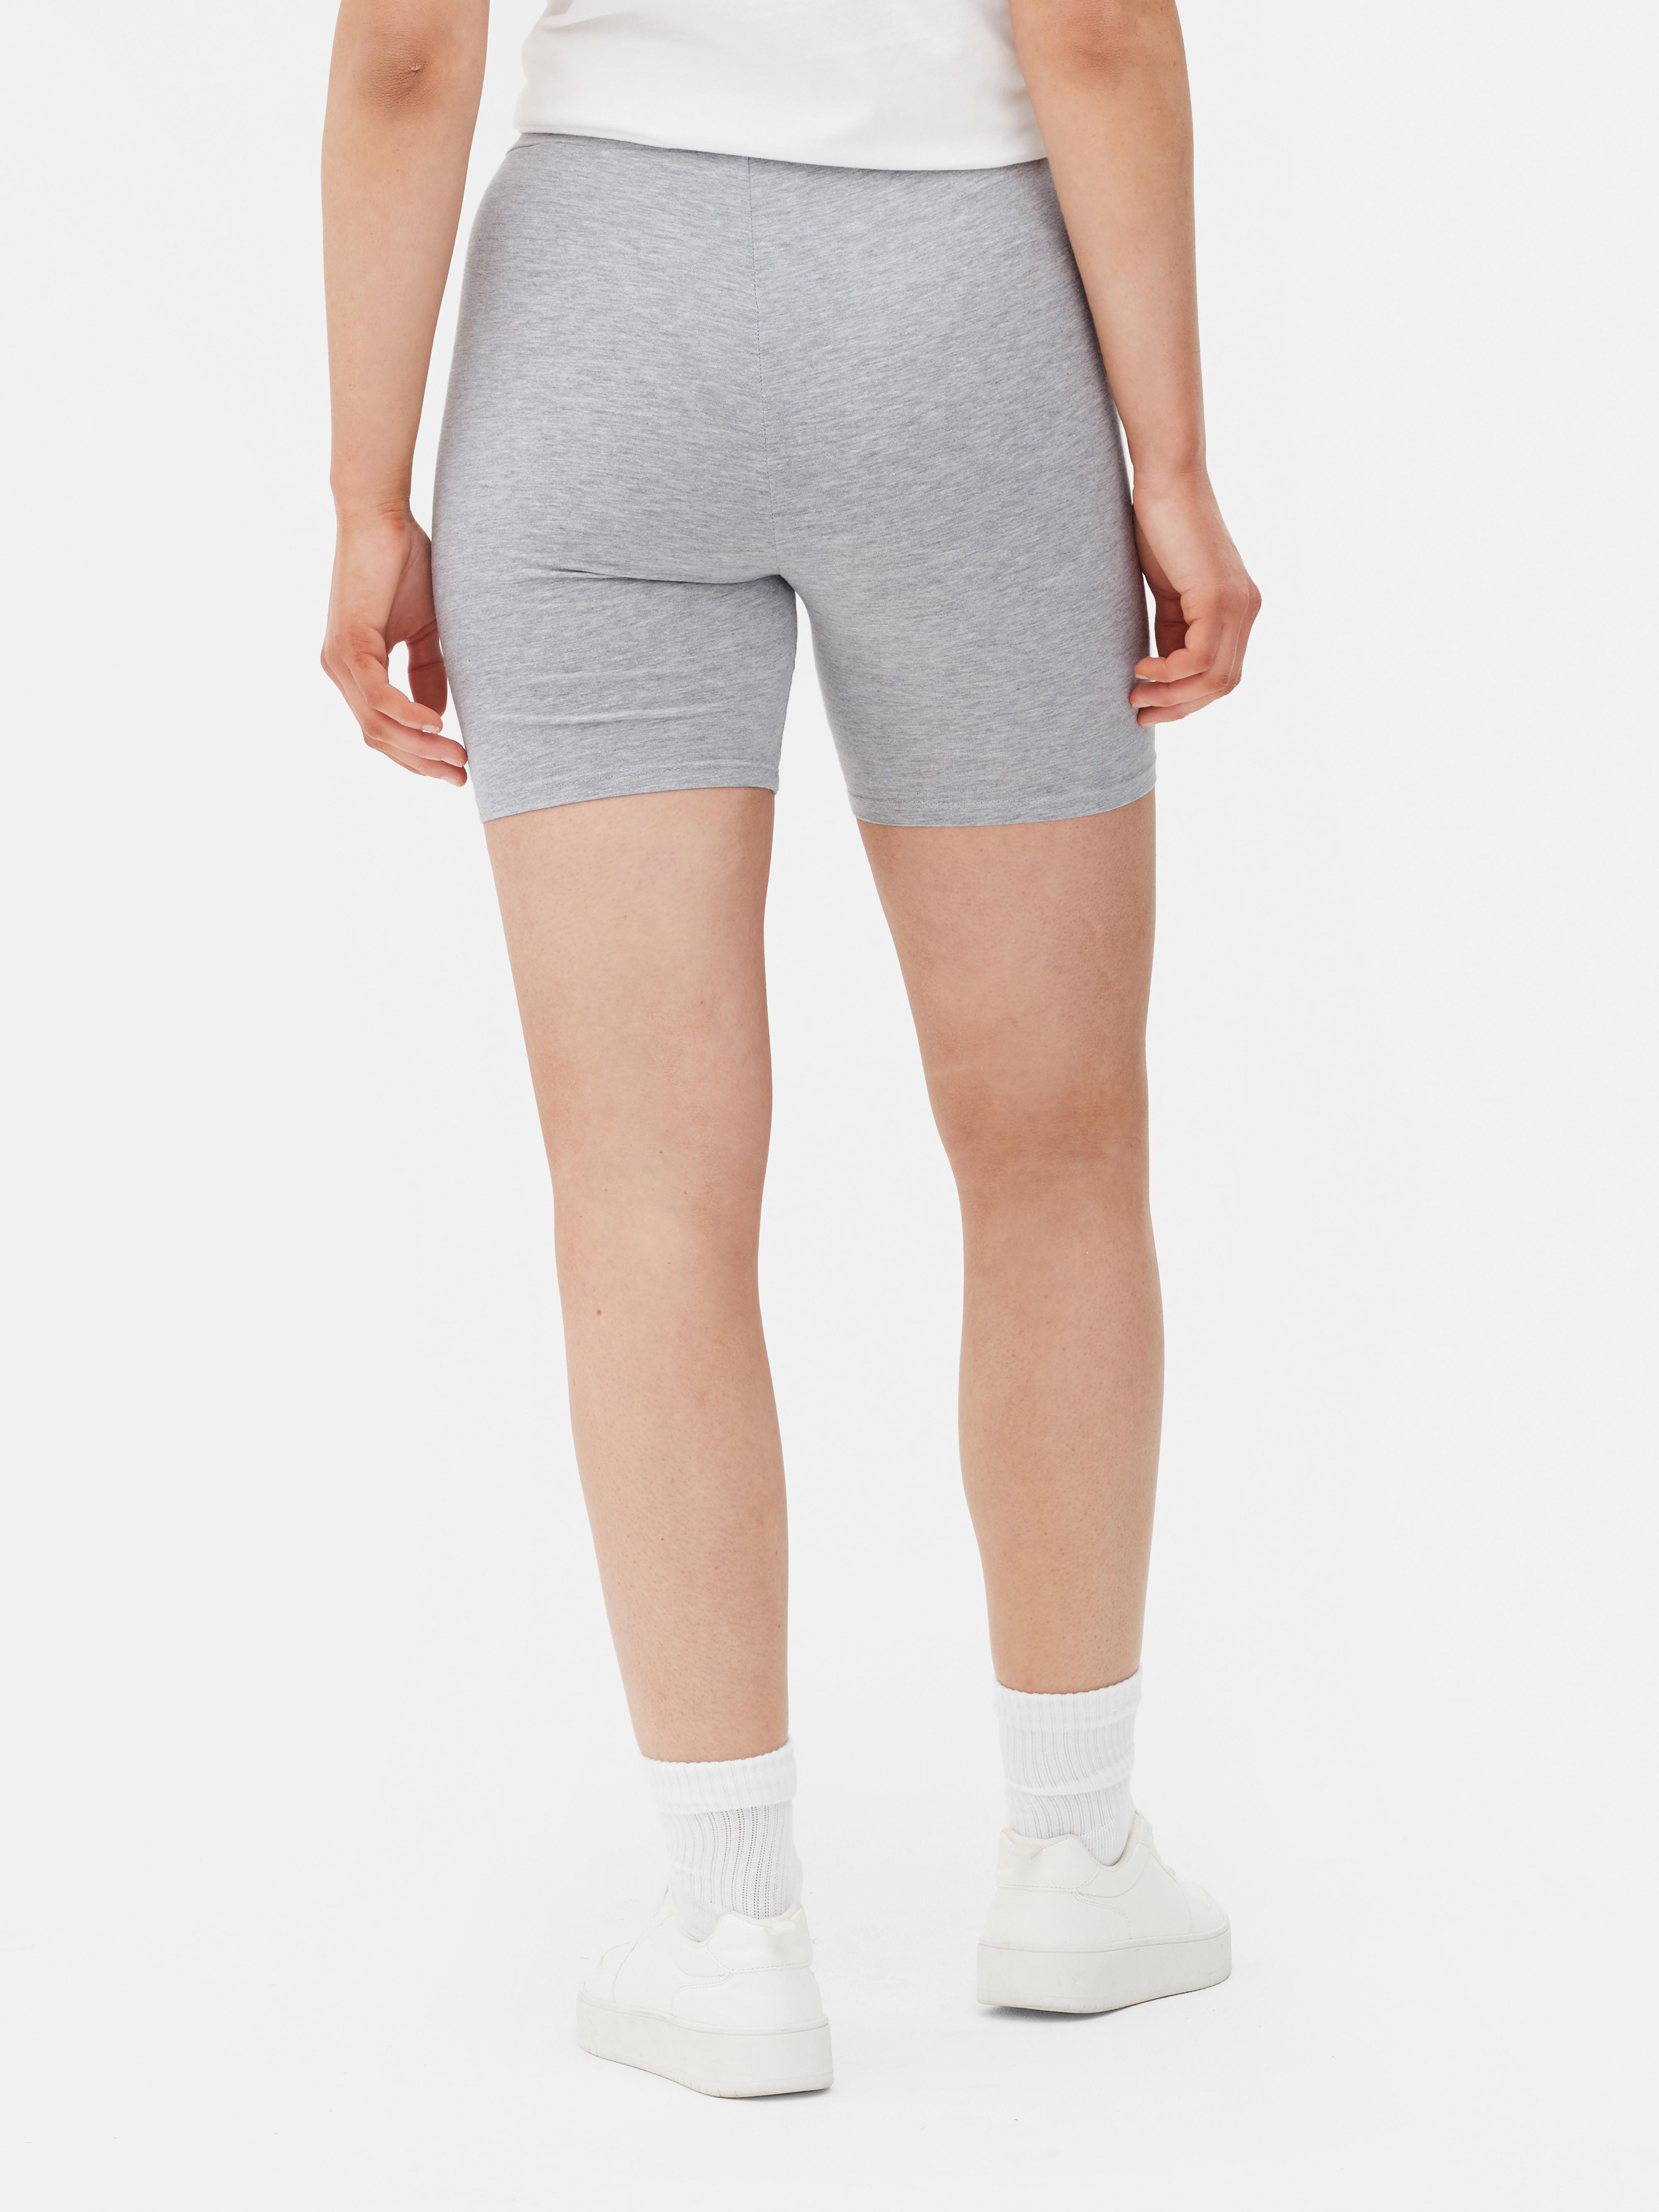 Street style today Shirt - @boohoo Cycle shorts - Primark leggings